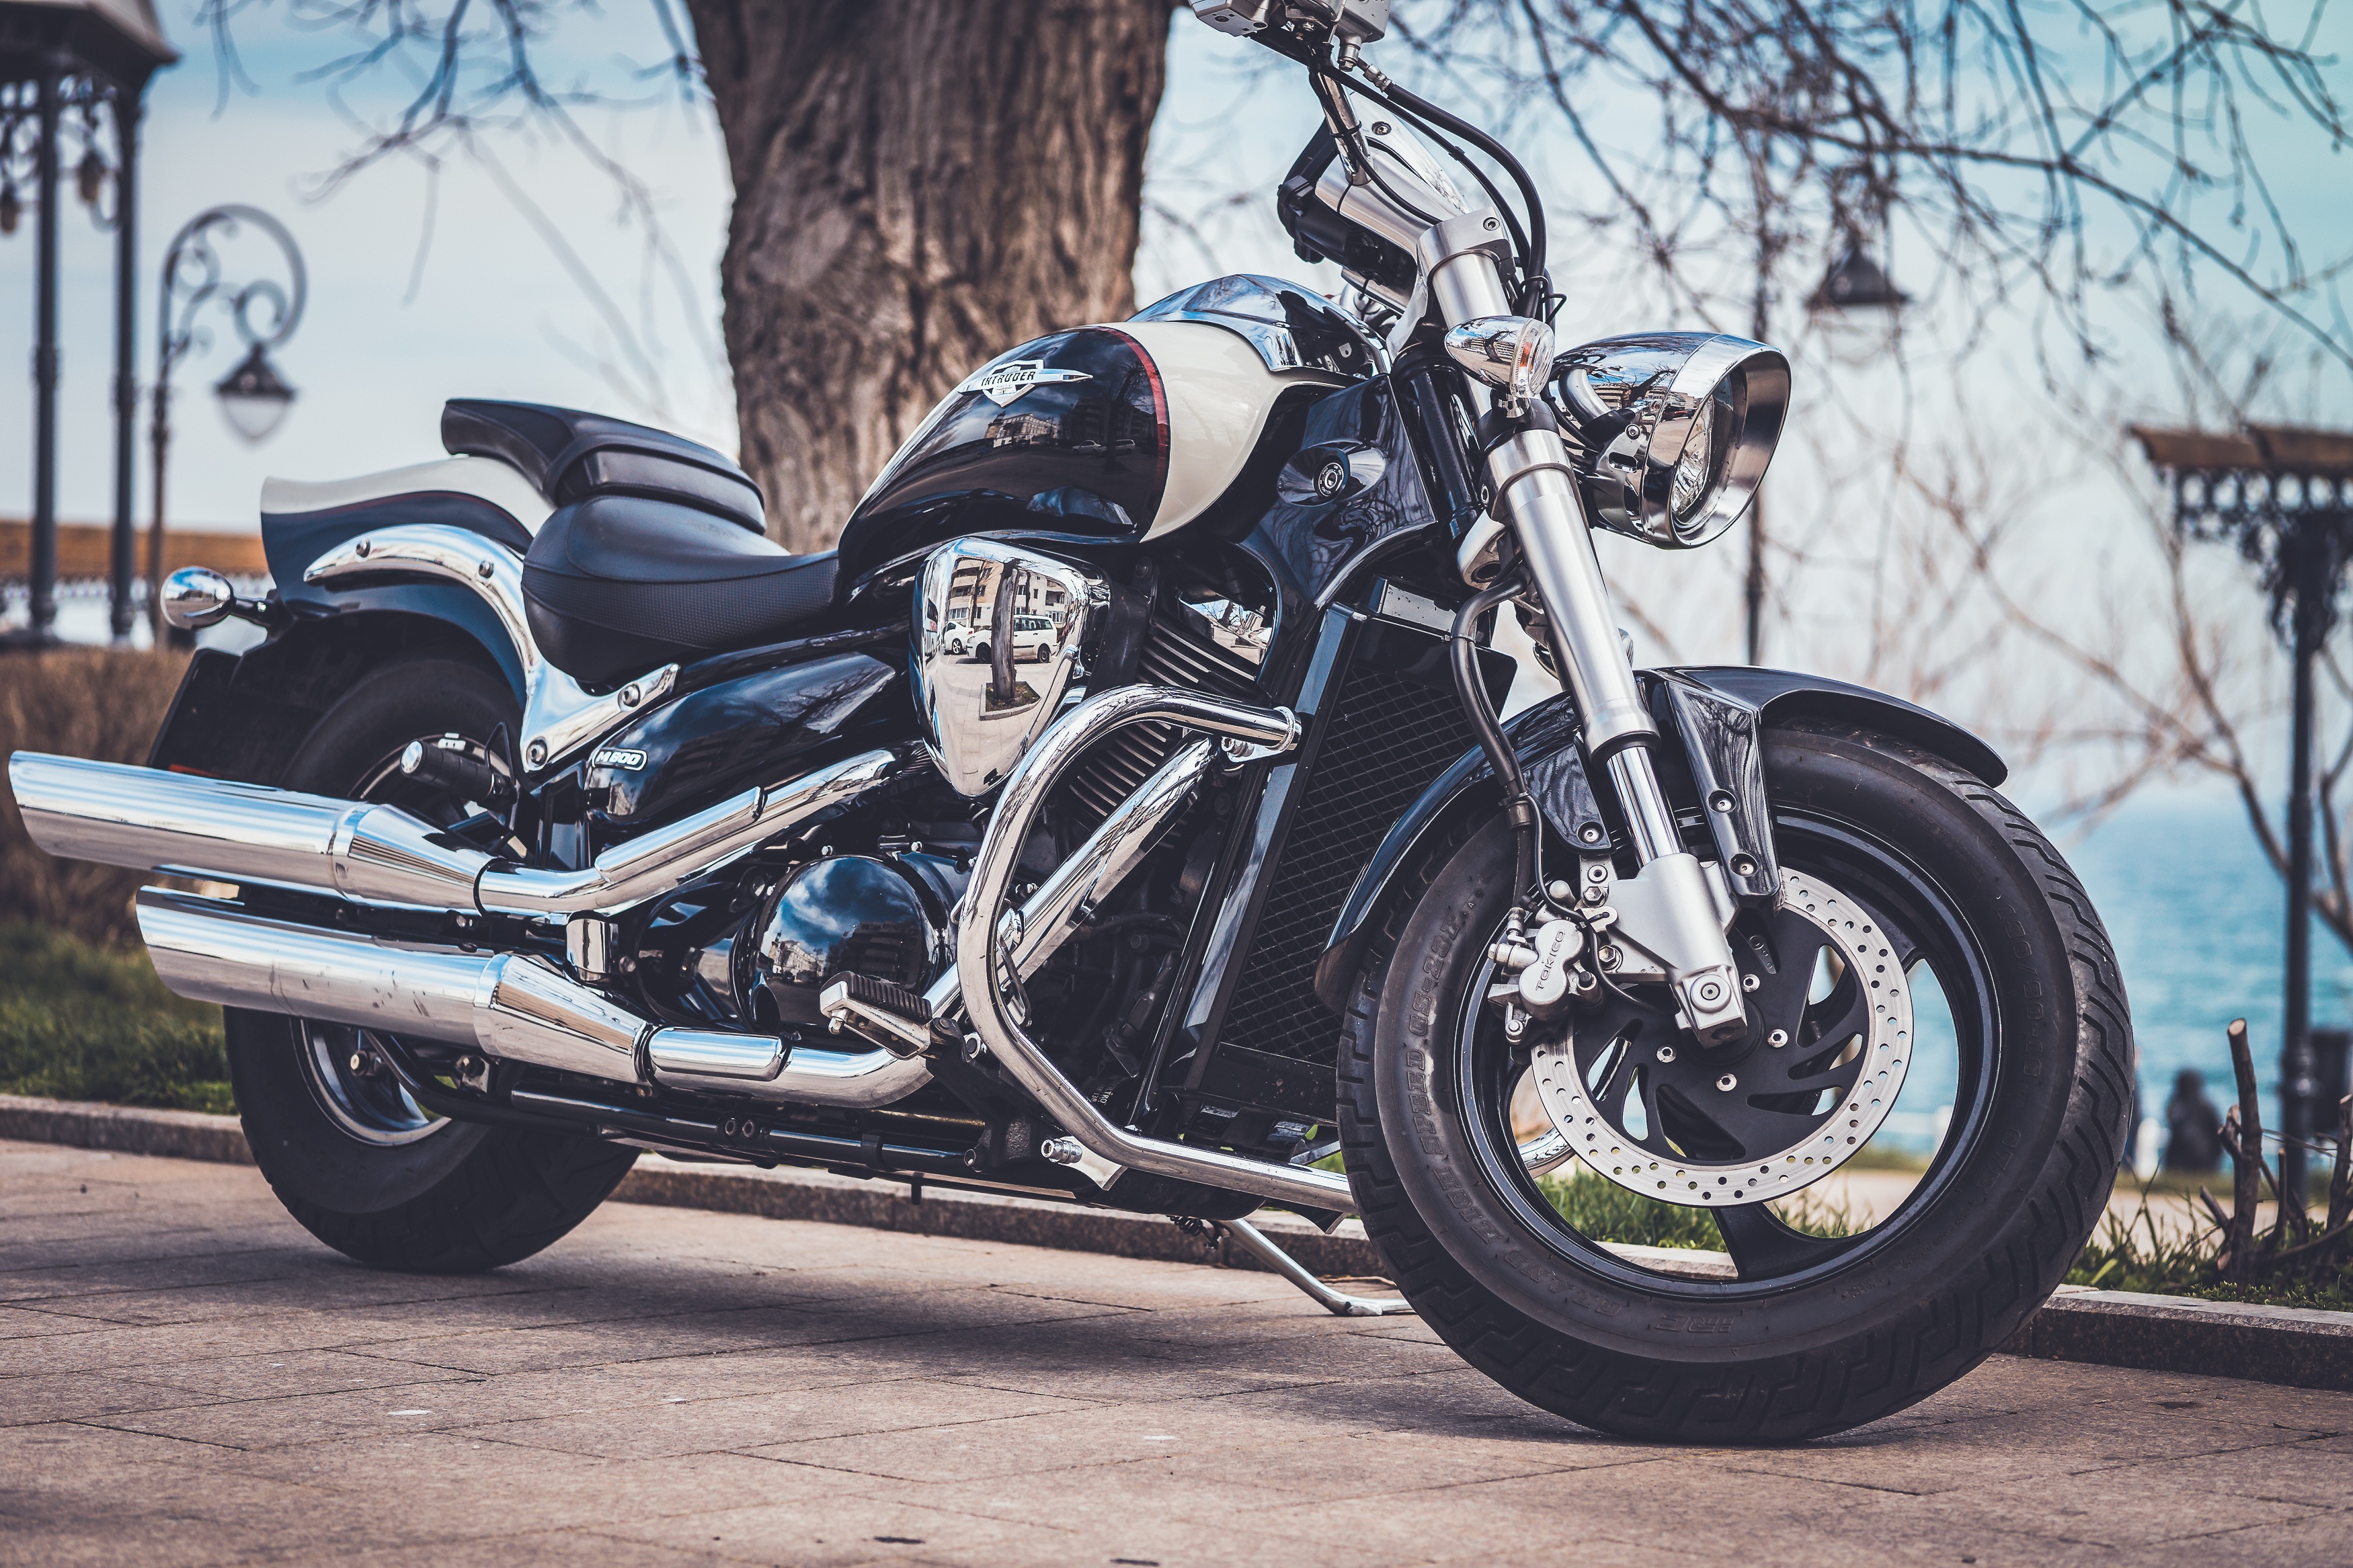 96739 descargar imagen motocicletas, vista lateral, perfil, motocicleta, rueda, neumático: fondos de pantalla y protectores de pantalla gratis